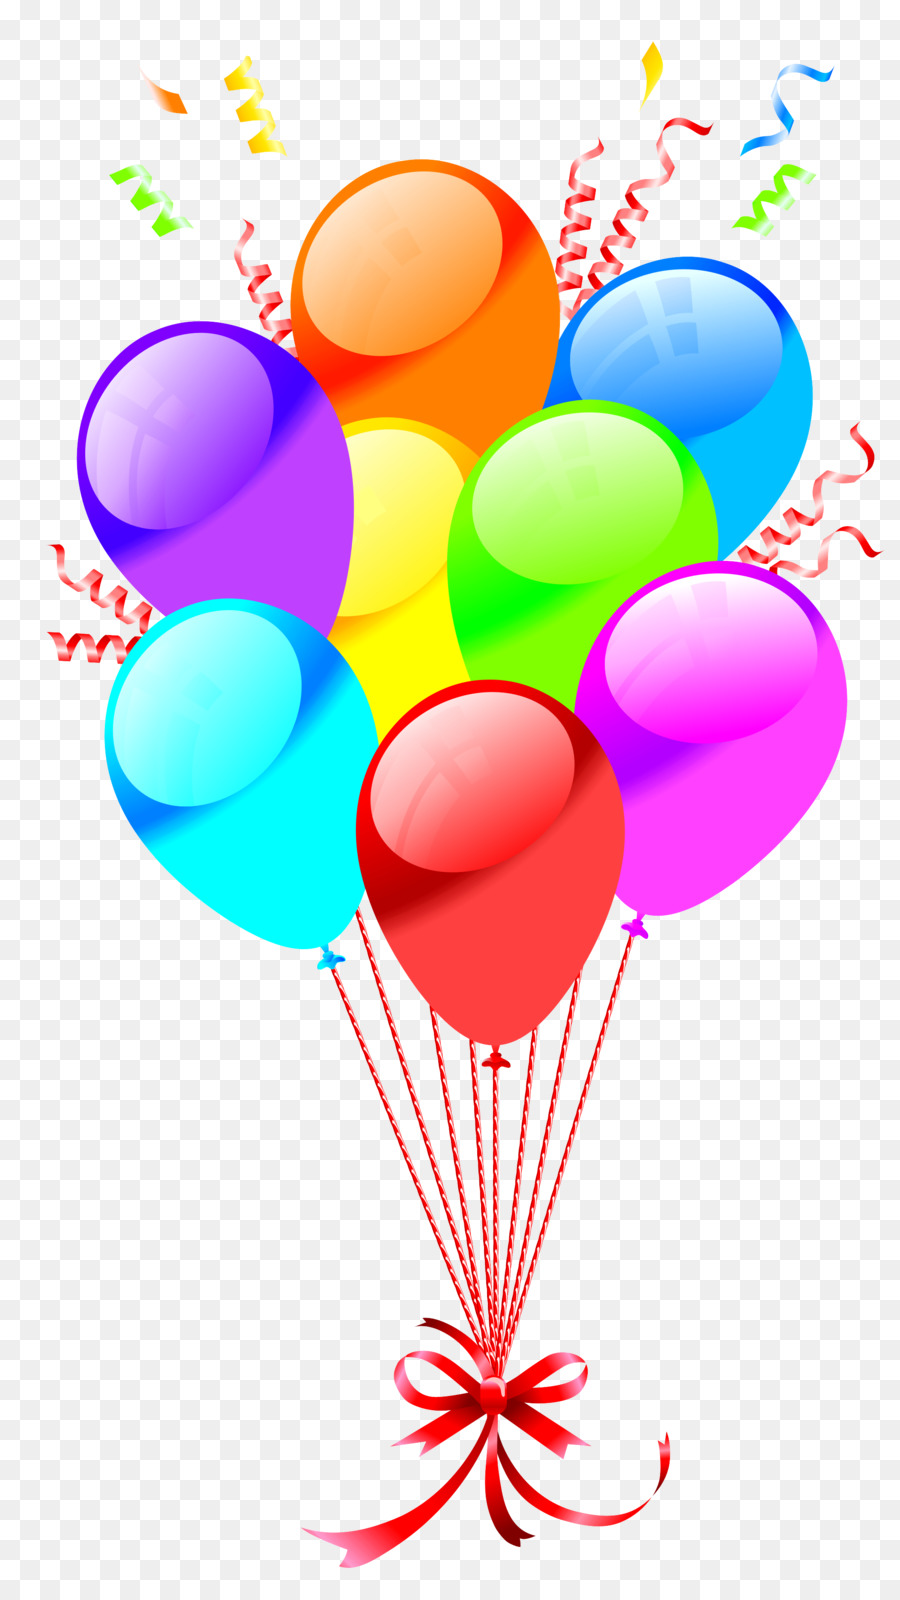 Happy birthday balloons.